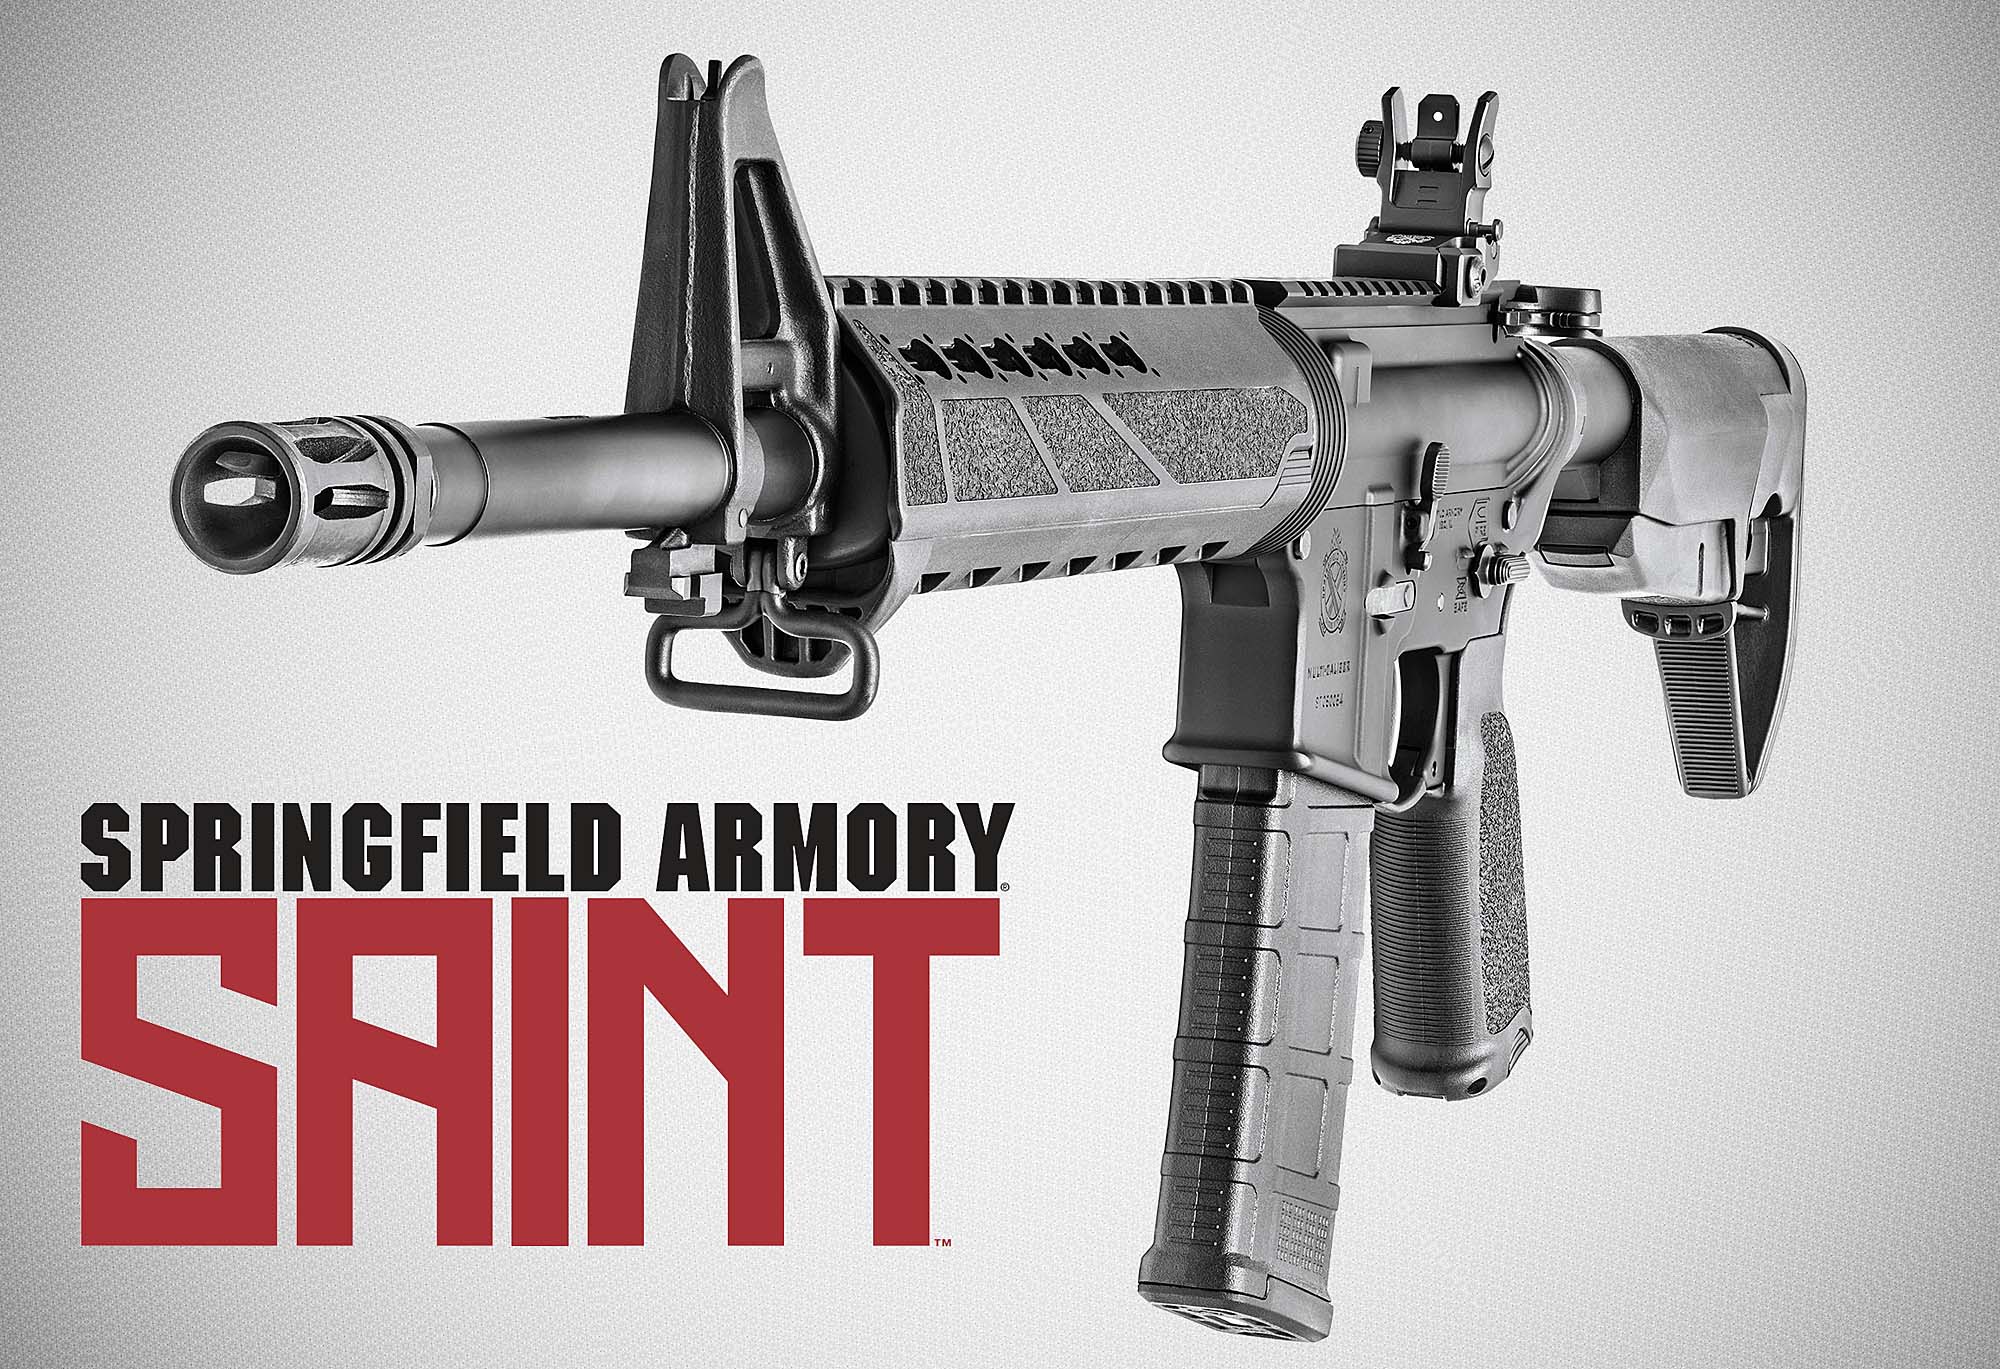 Springfield Armory Saint Logo - Springfield Armory SAINT, the new 5.56mm semiauto rifle | GUNSweek.com